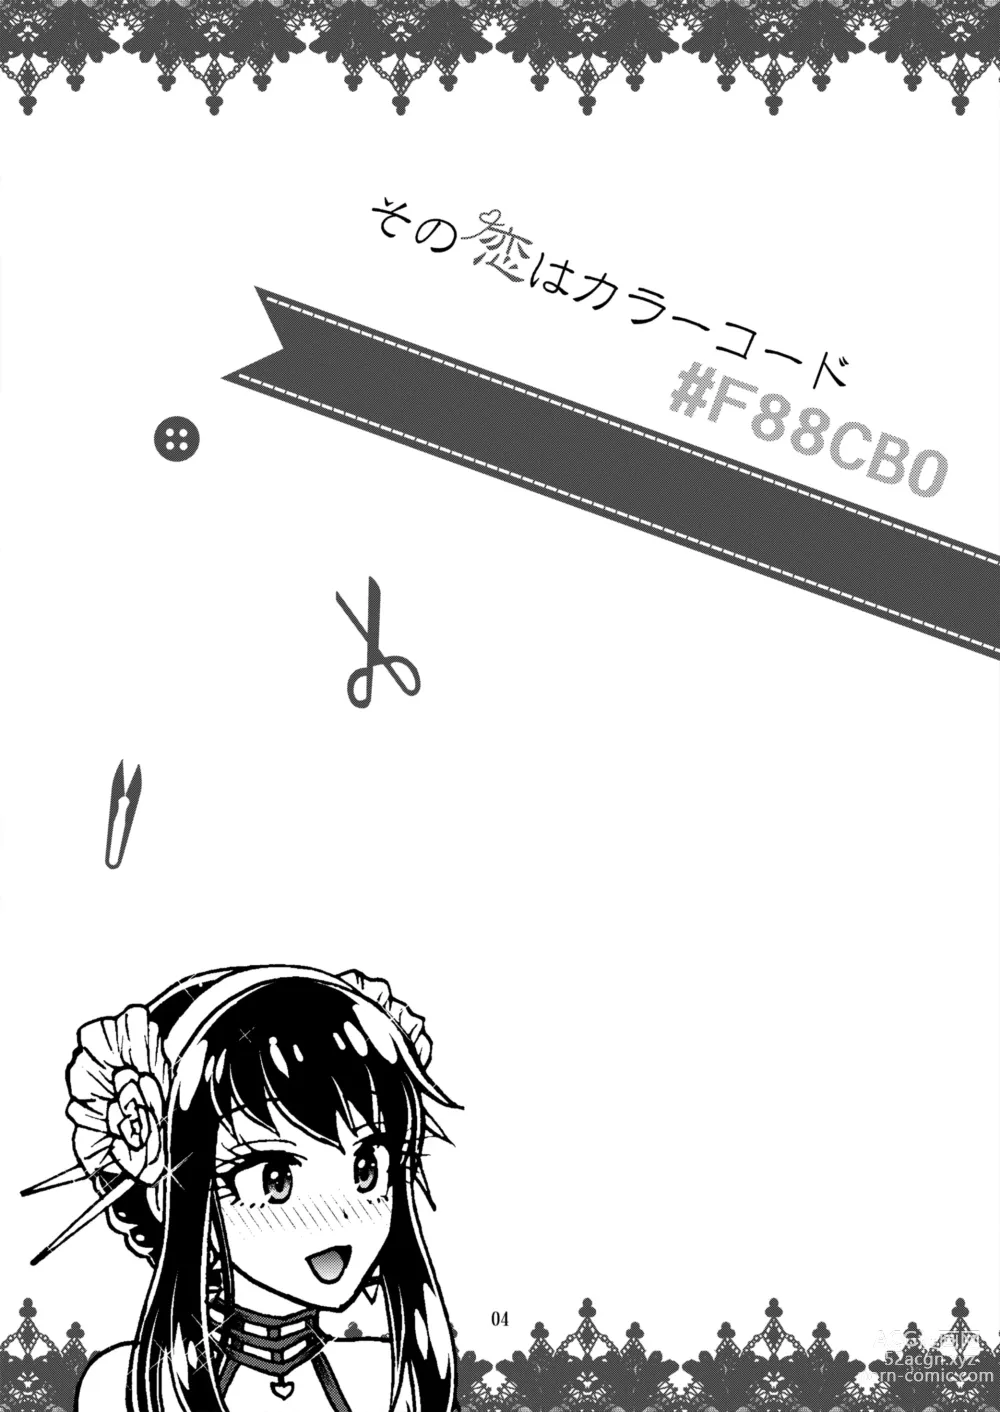 Page 3 of doujinshi Sono Koi wa Color Code #F88CB0